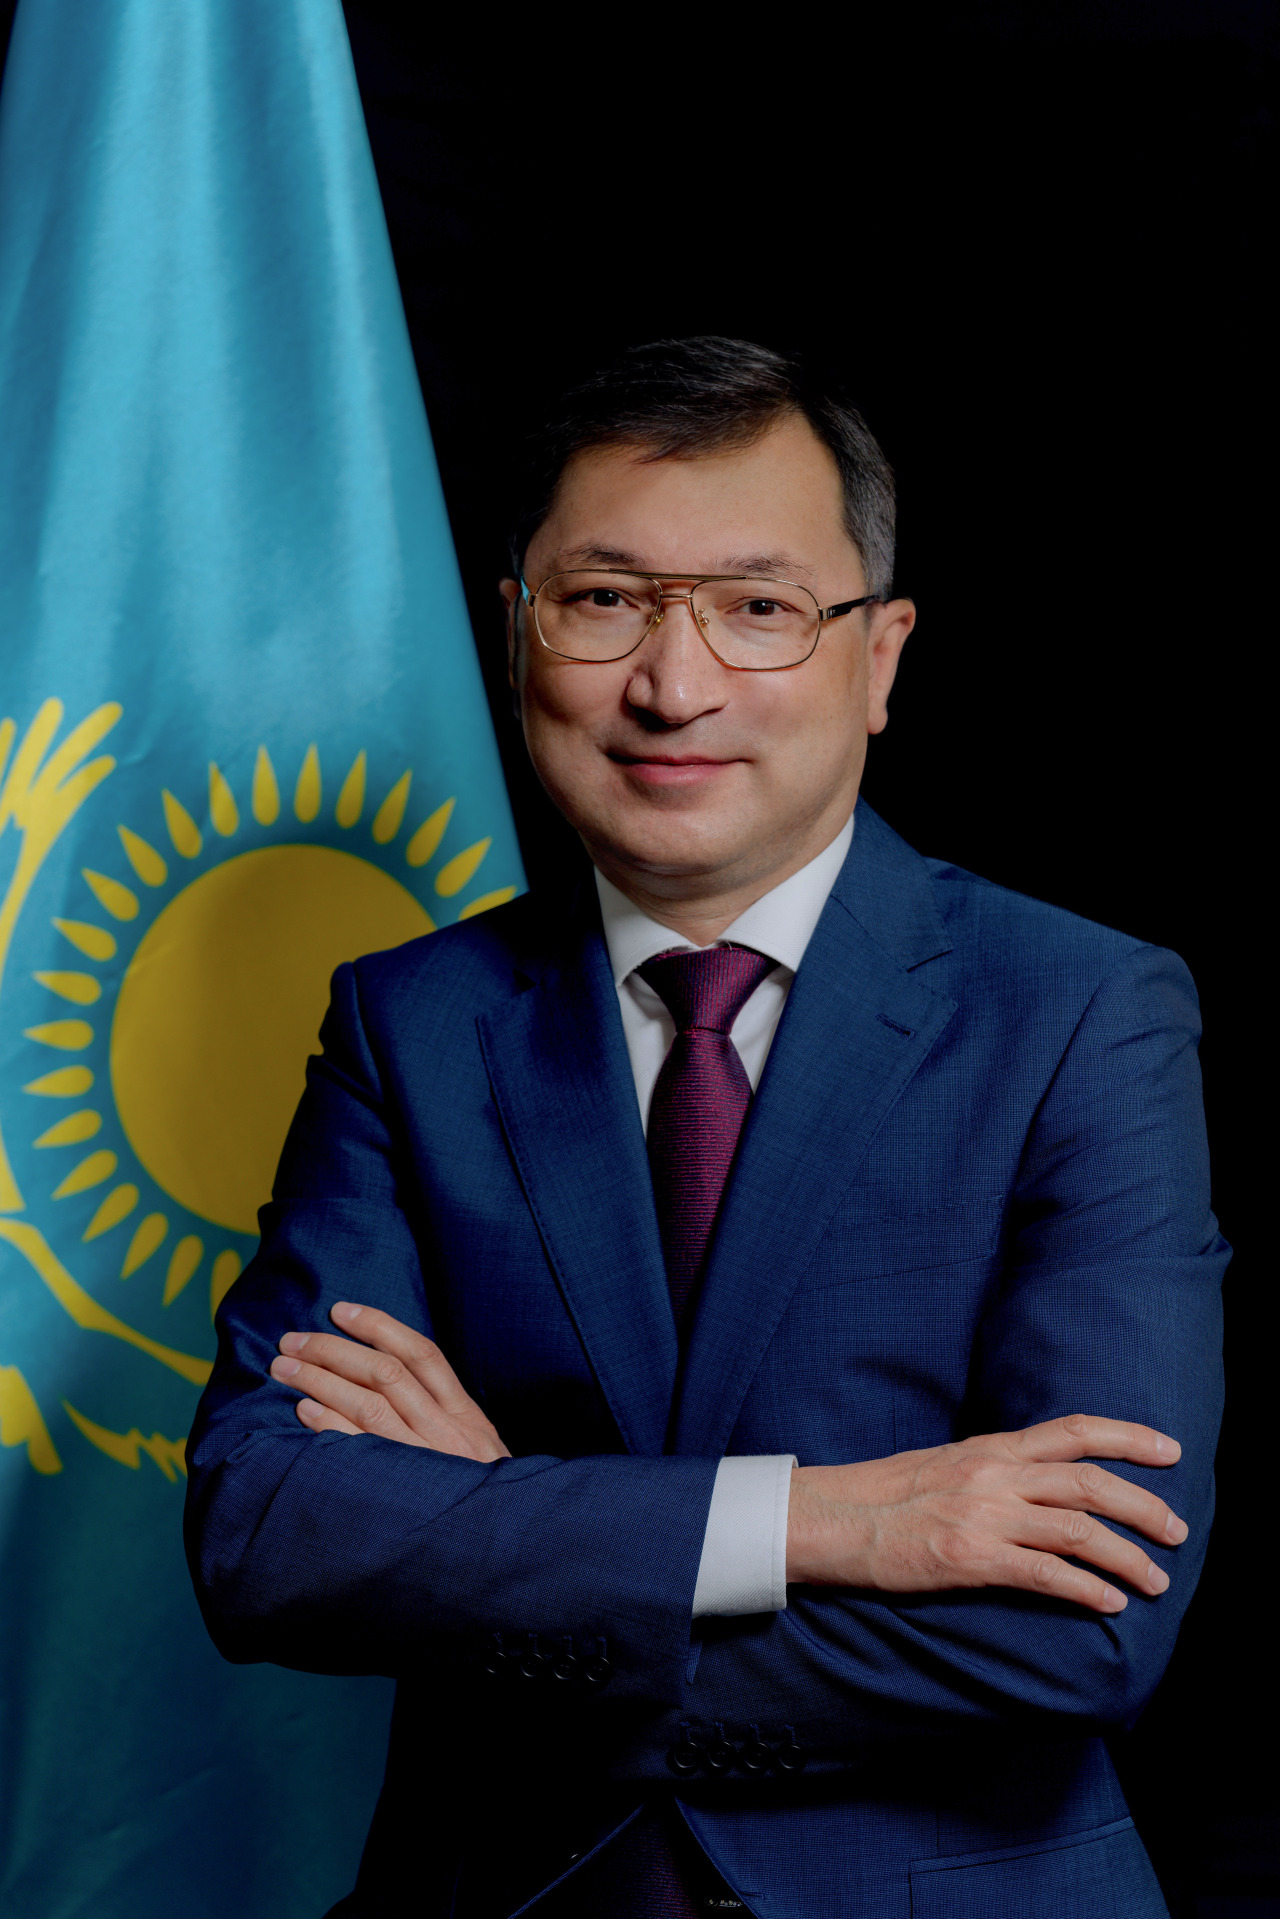 Bakyt Dyussenbayev, Kazakhstan’s ambassador to Korea (Embassy of Kazakhstan in Seoul)